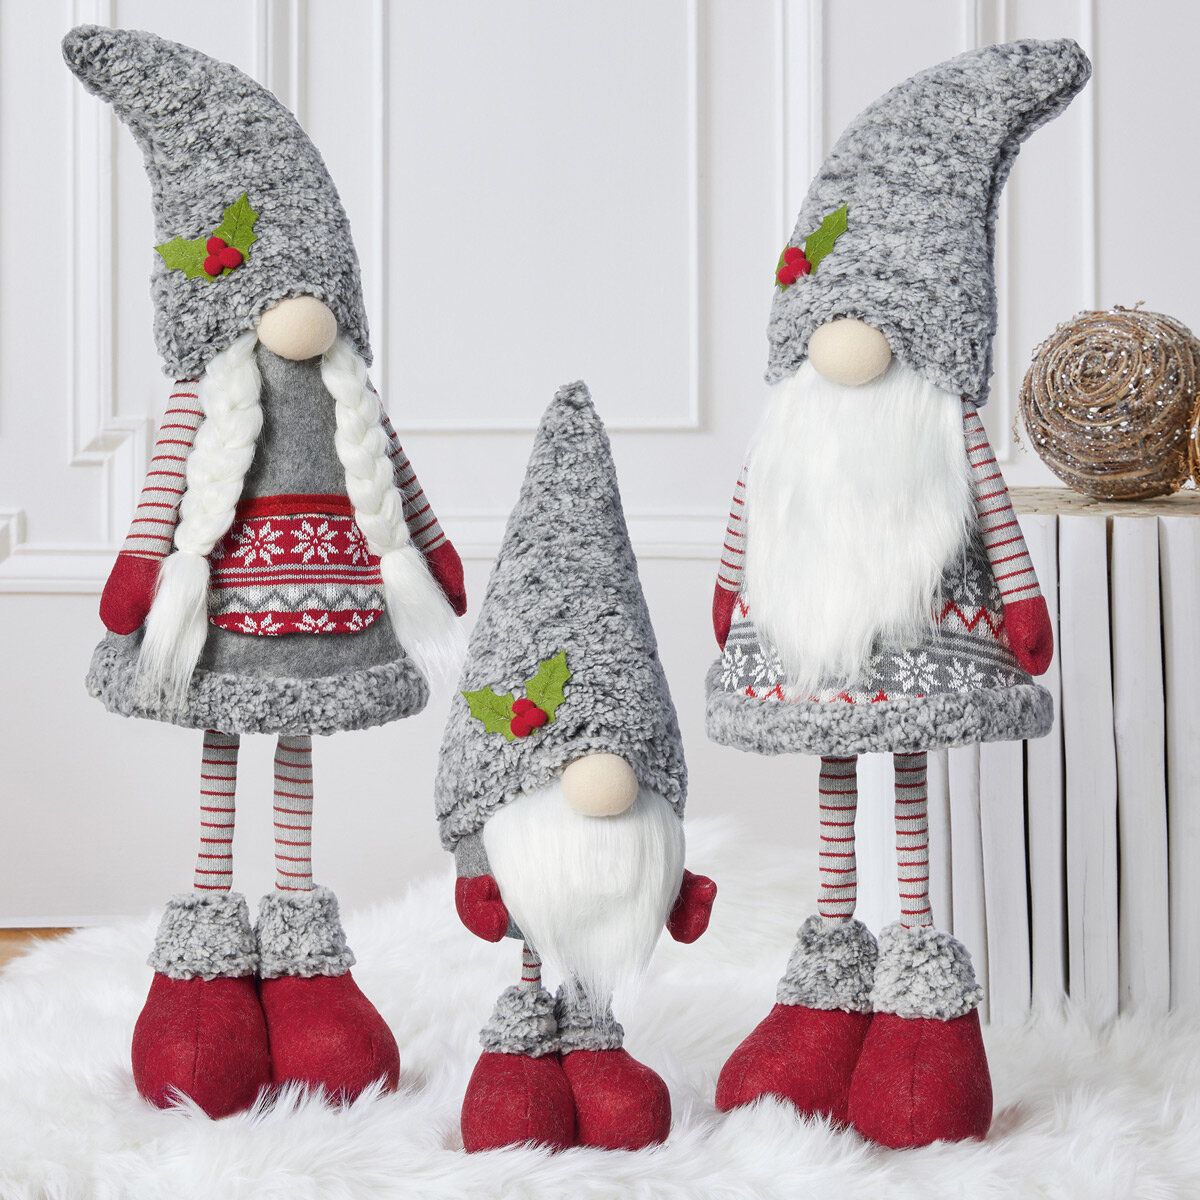 Buy Gnomes Set of 3 Lifestyle Image at Costco.co.uk